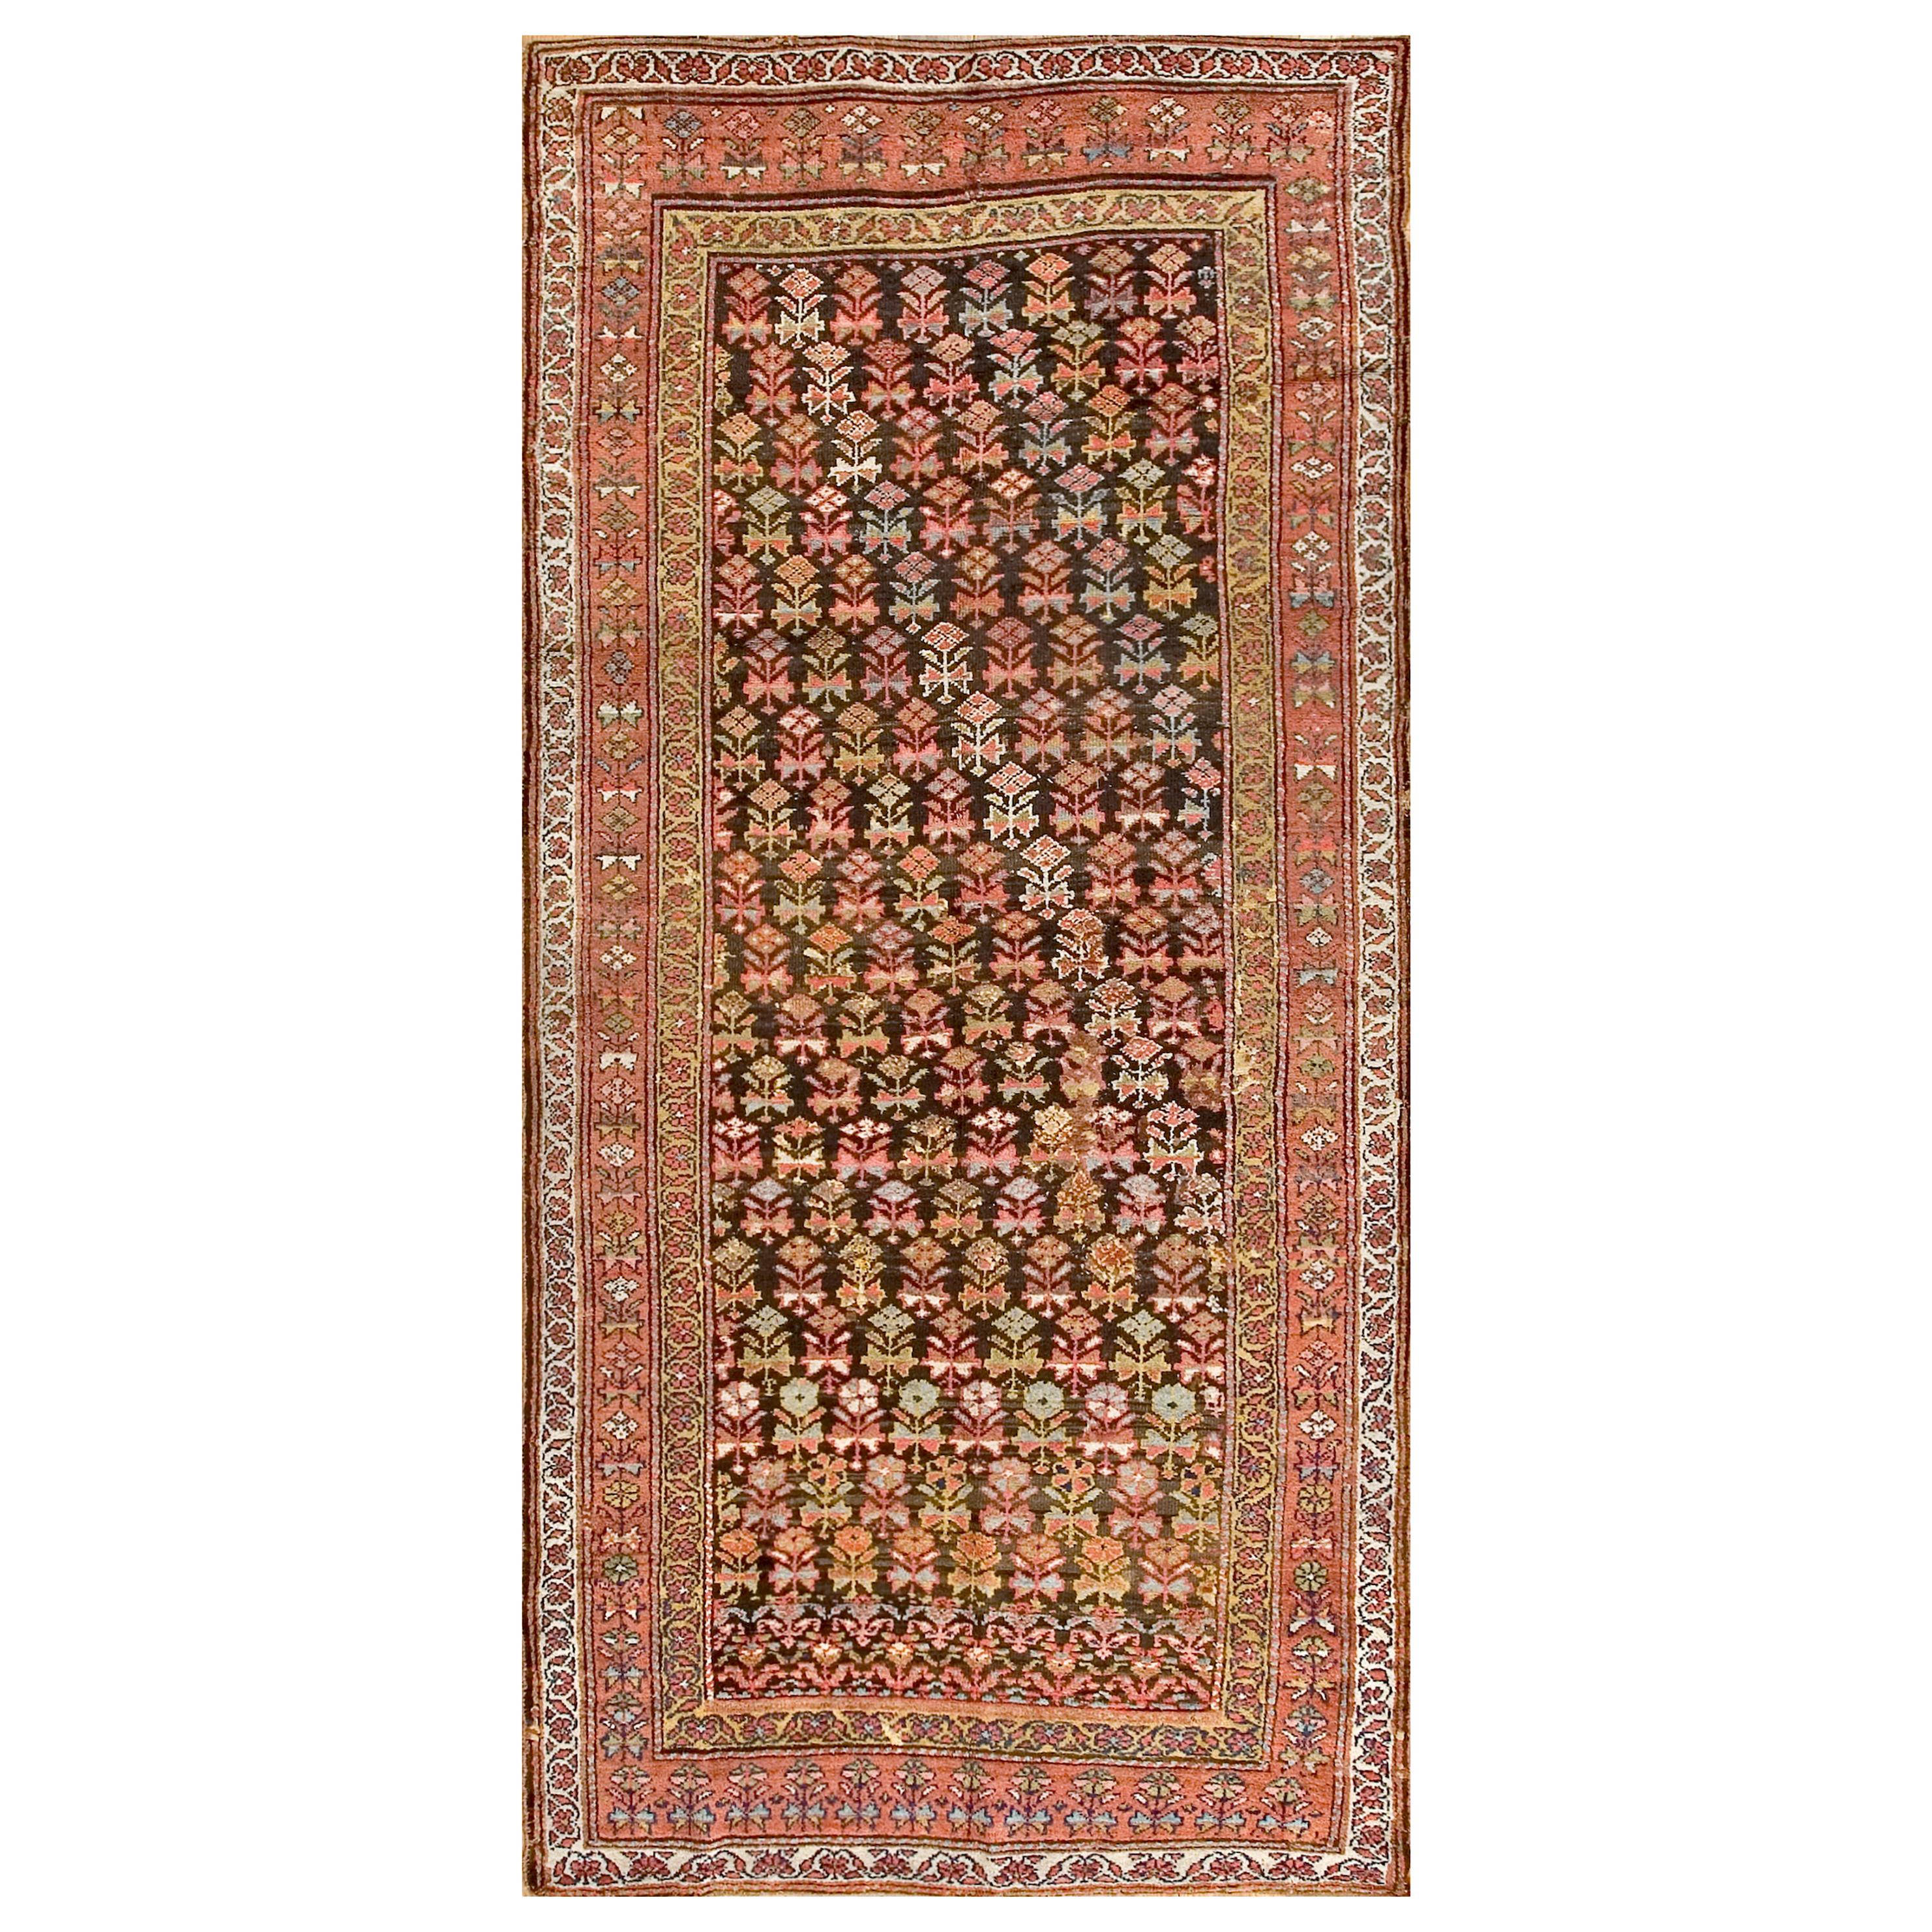 Early 20th Century Persian Kurdish Carpet ( 5' x 10'6" - 152 x 320 ) For Sale